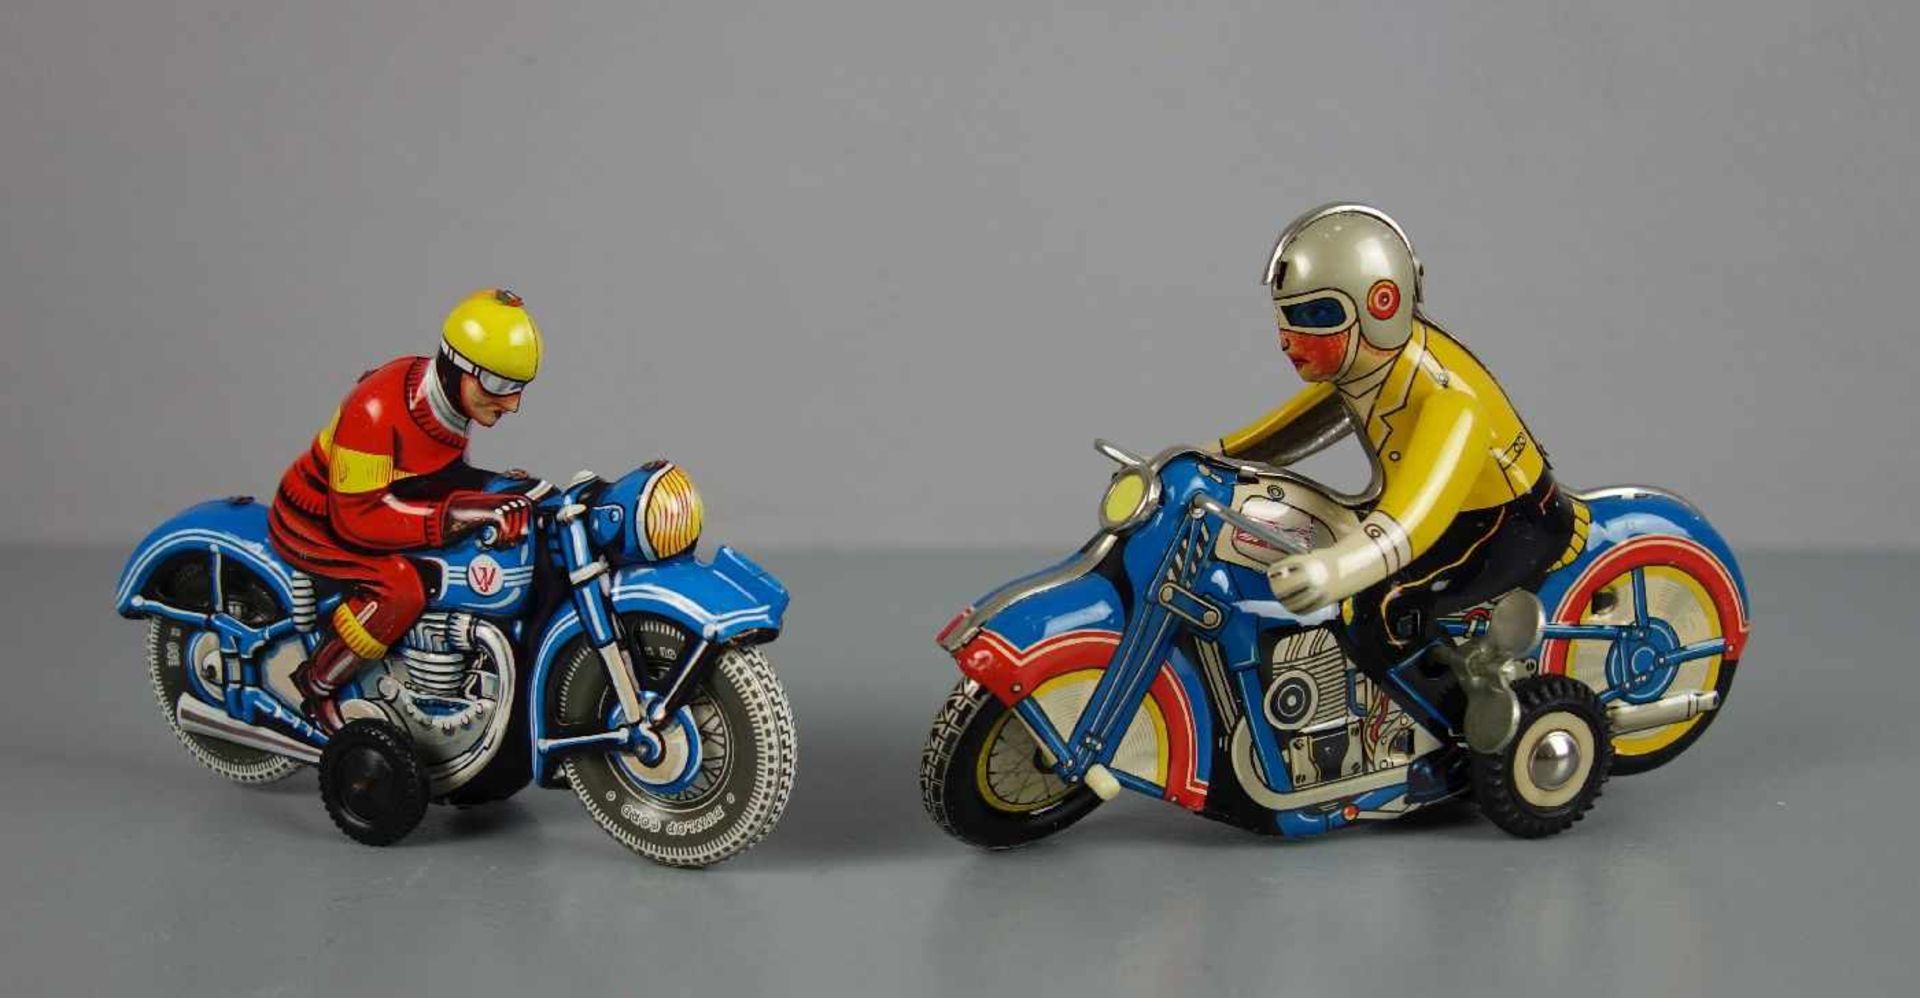 2 BLECHSPIELZEUGE / FAHRZEUGE: Motorräder / two tin toy bikes, 20. Jh., farbig lithografiertes